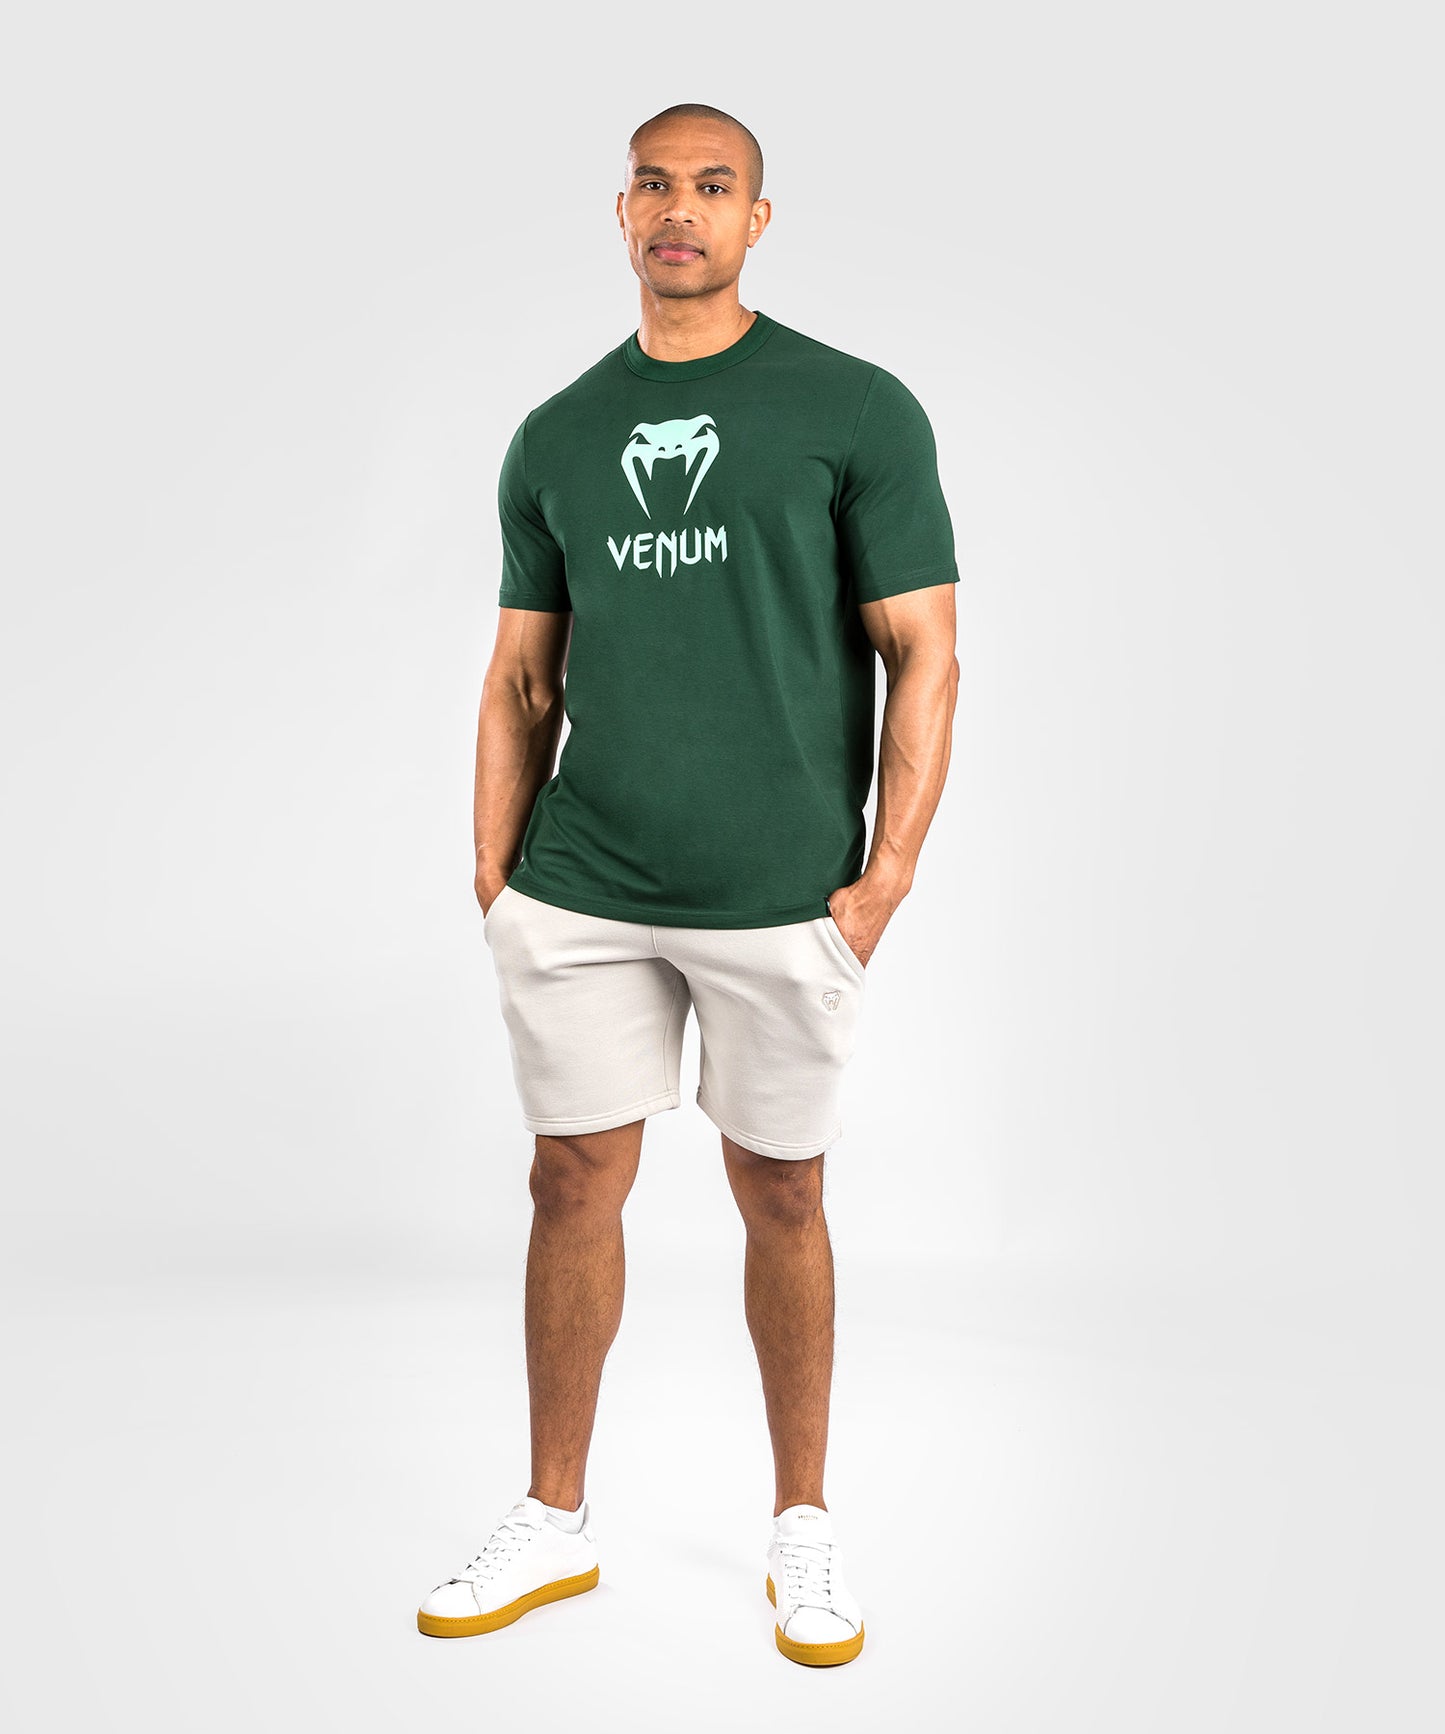 Venum Classic T-Shirt - Dark Green/Turquoise